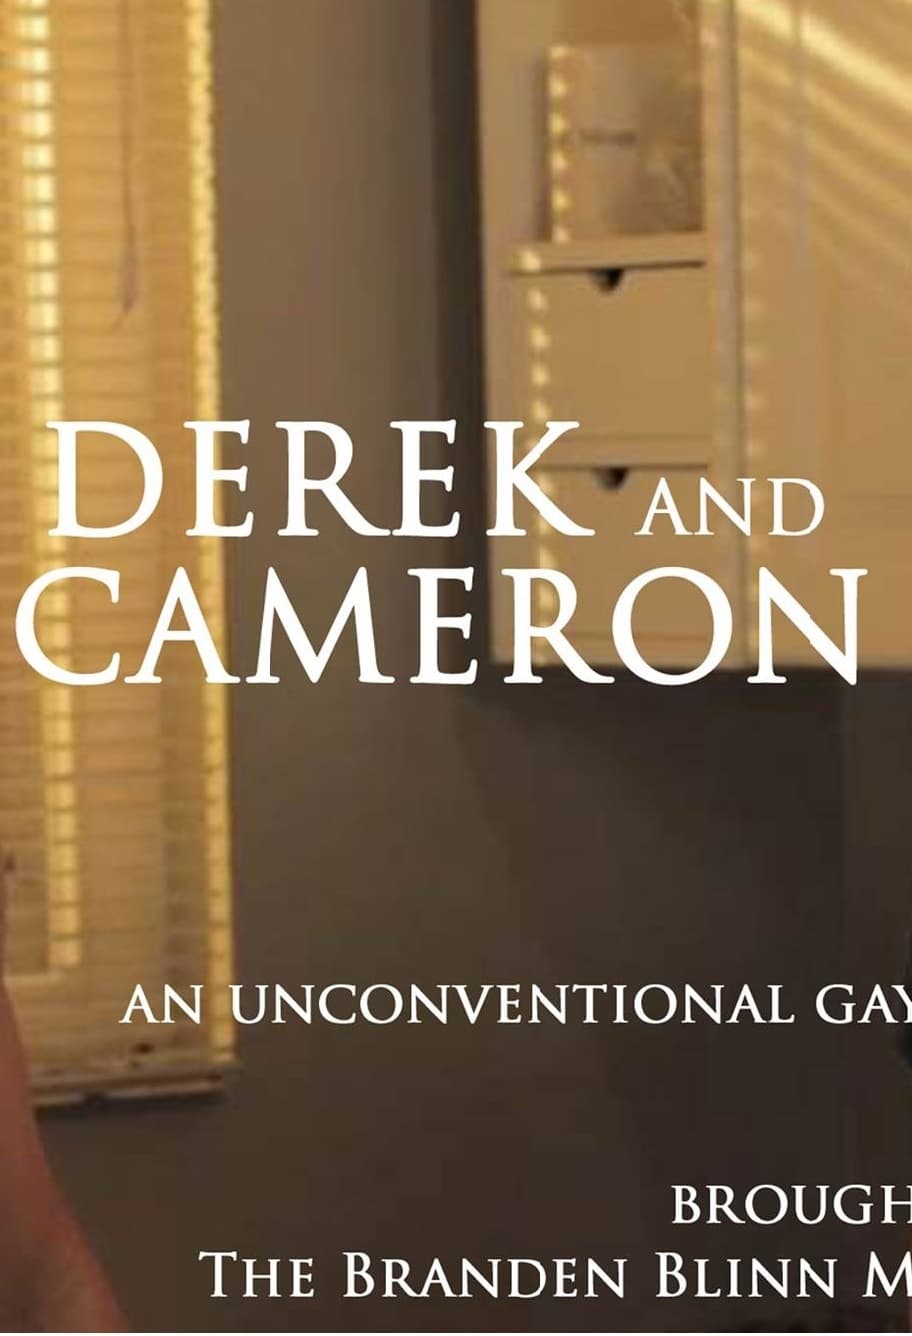 Derek and Cameron